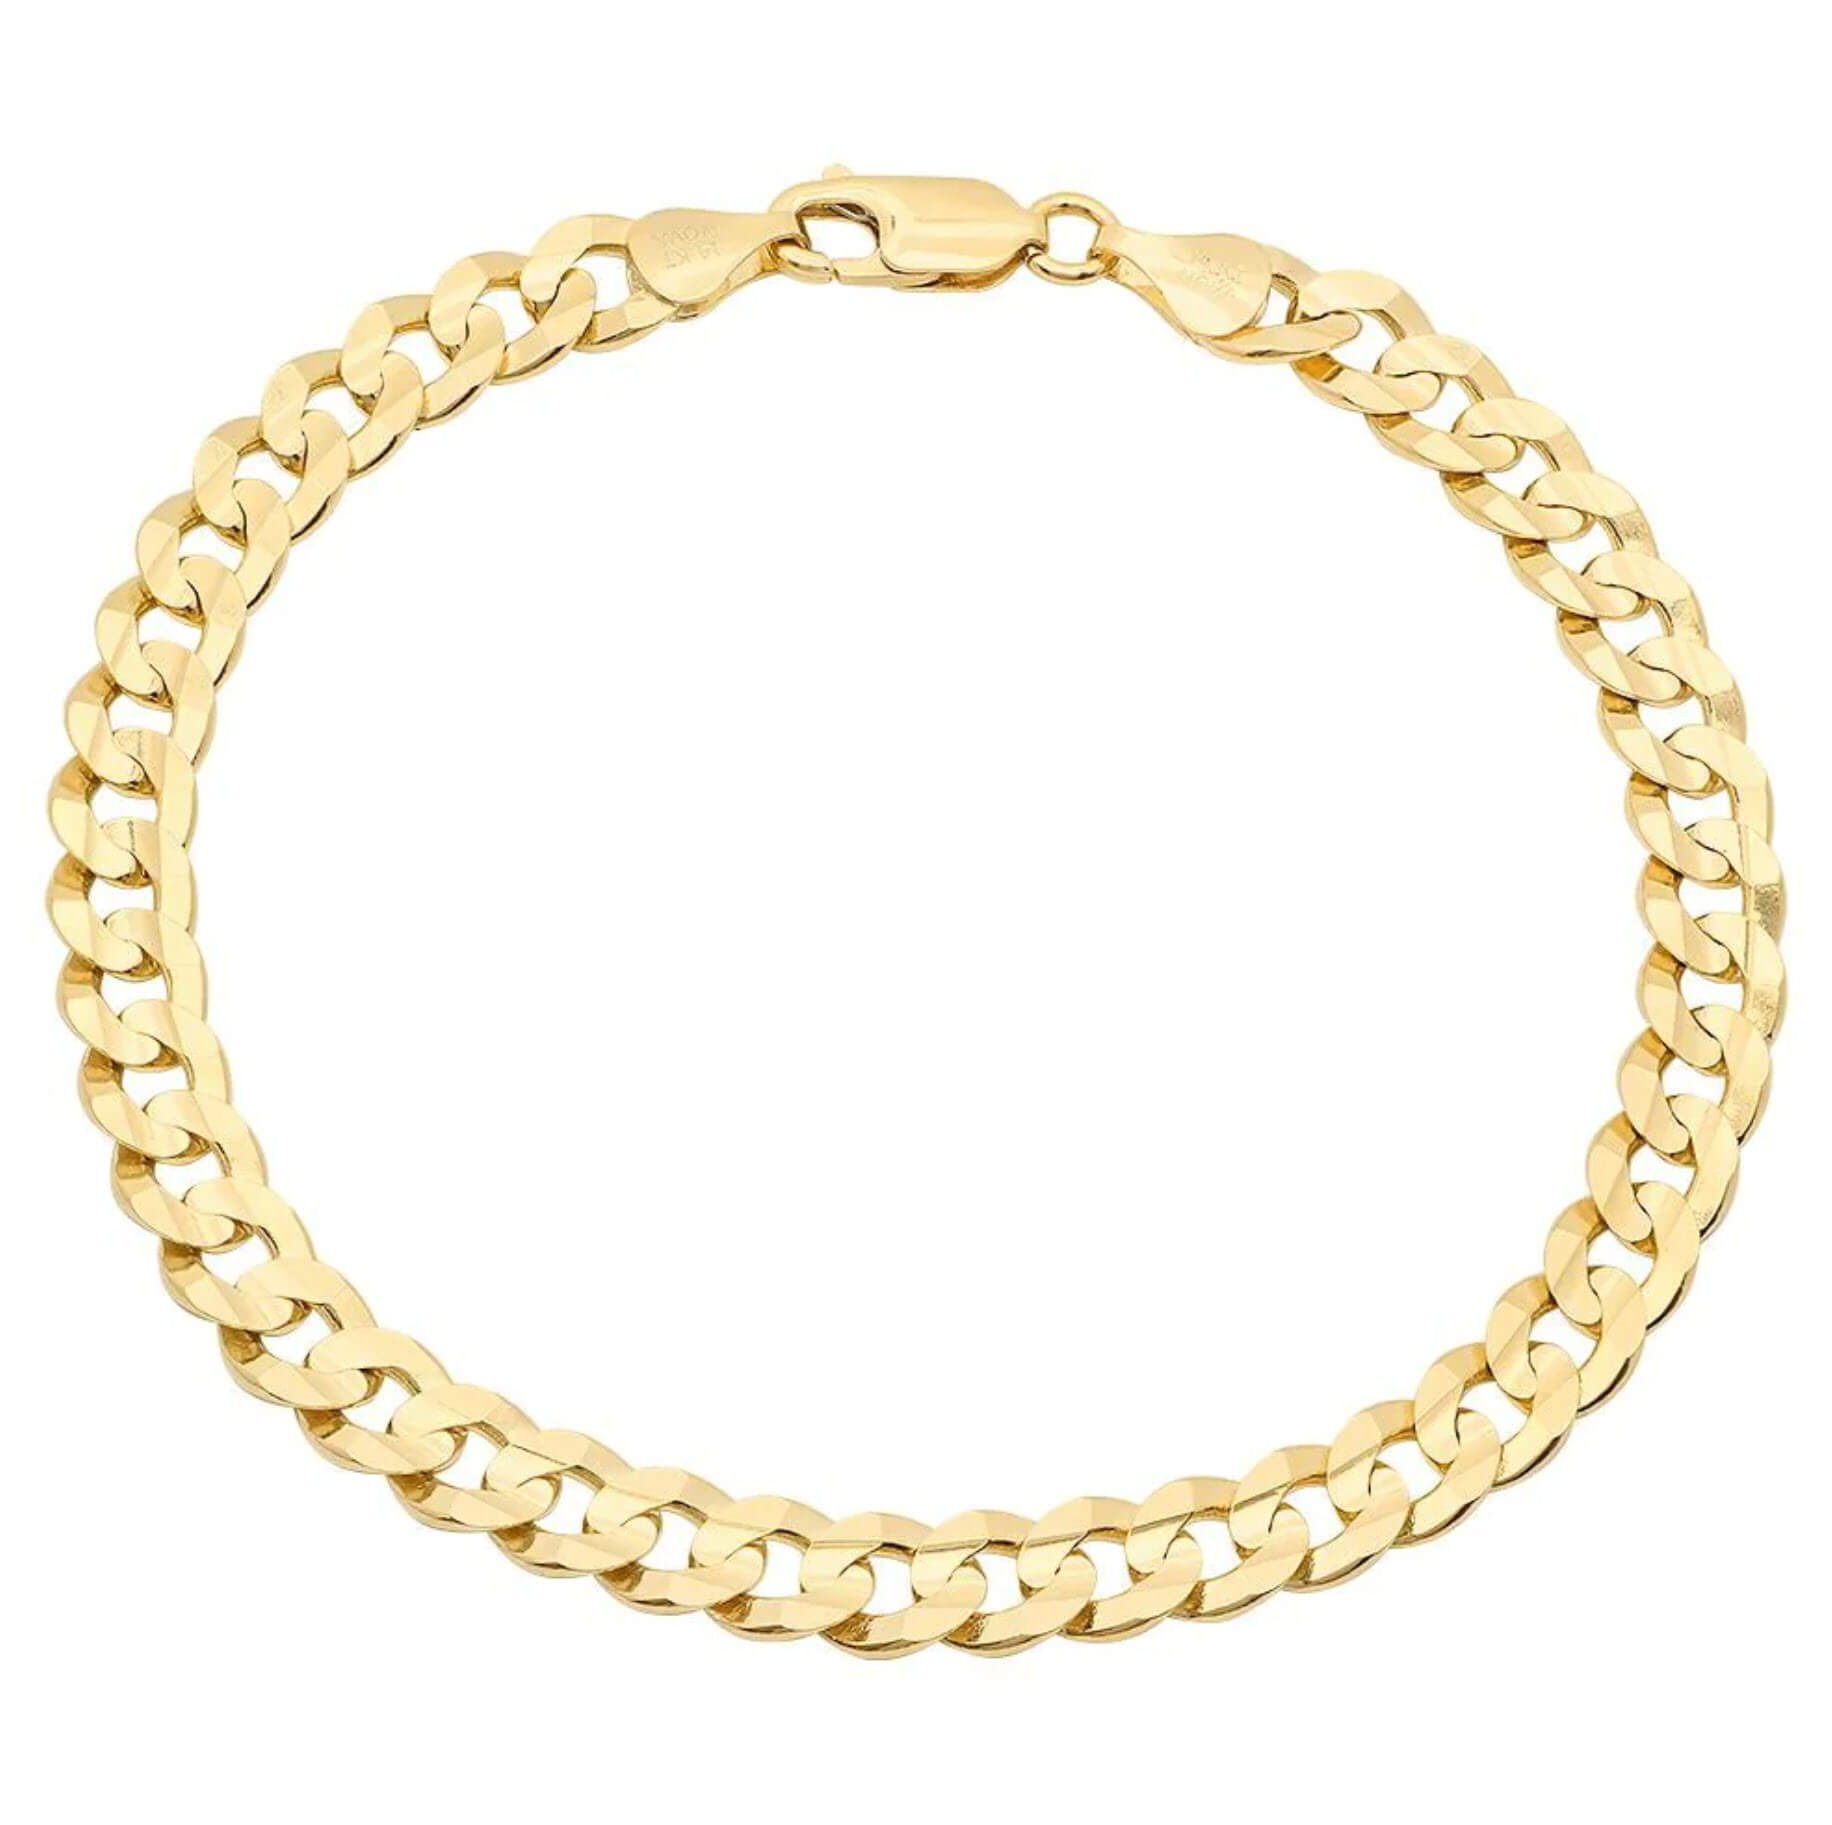 7mm Curb Link Bracelet in Solid 14K Yellow Gold | GoldBuyersUSA